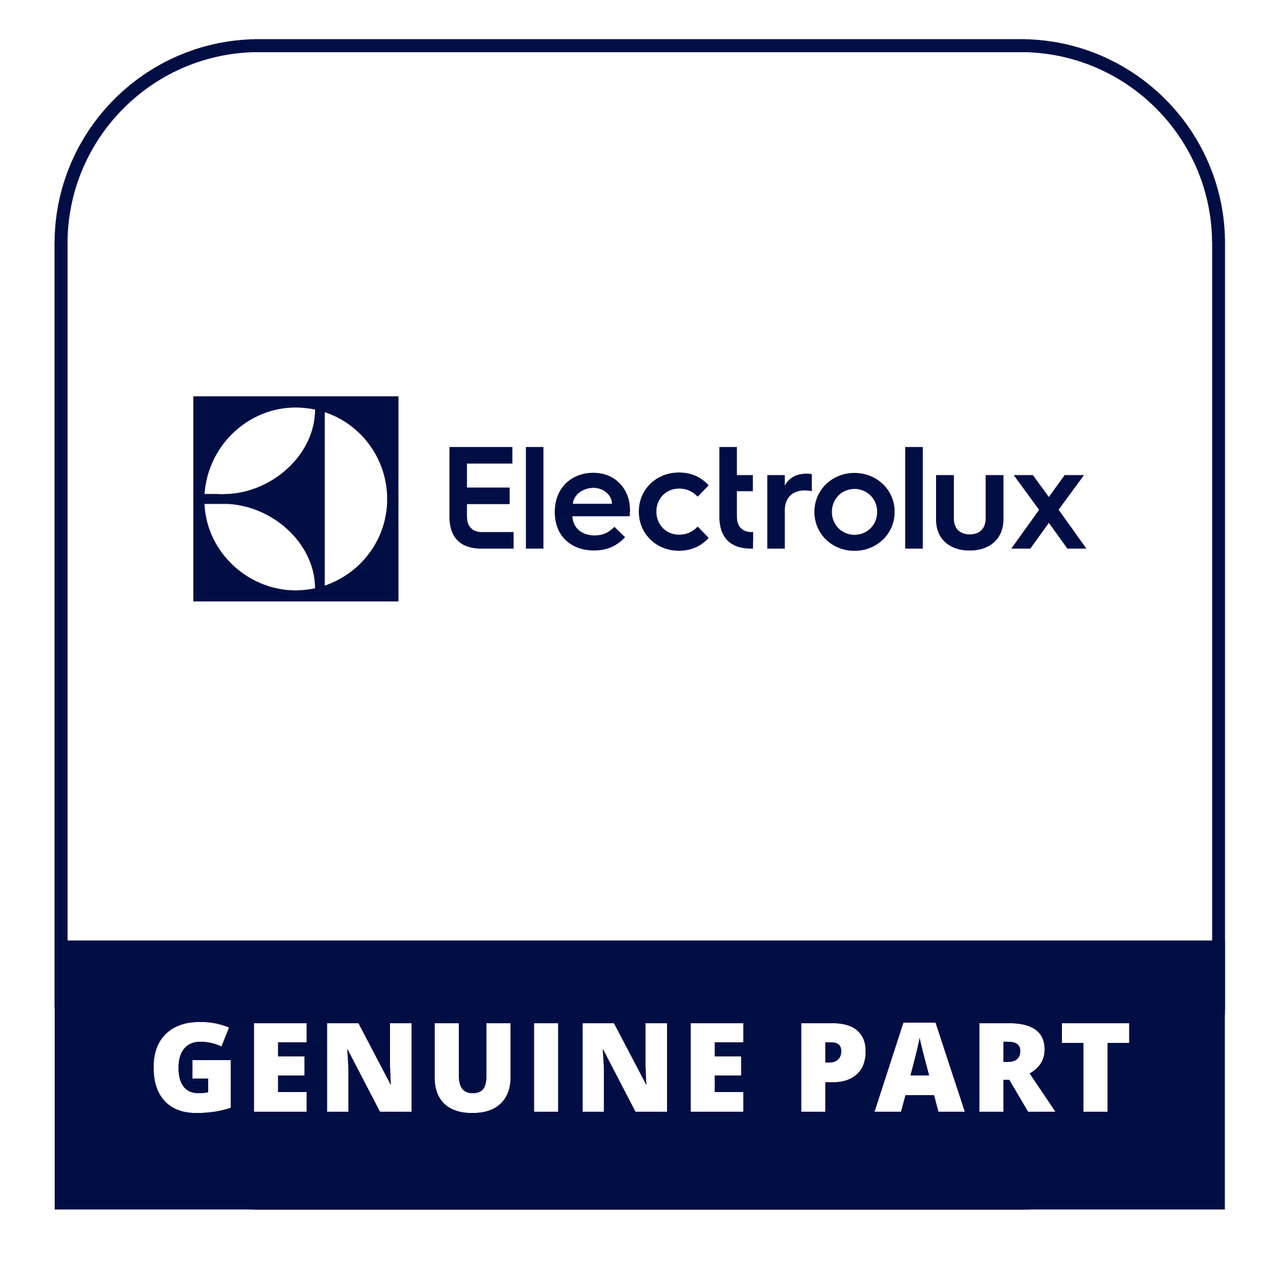 Frigidaire - Electrolux 5304498501 Nameplate - Genuine Electrolux Part